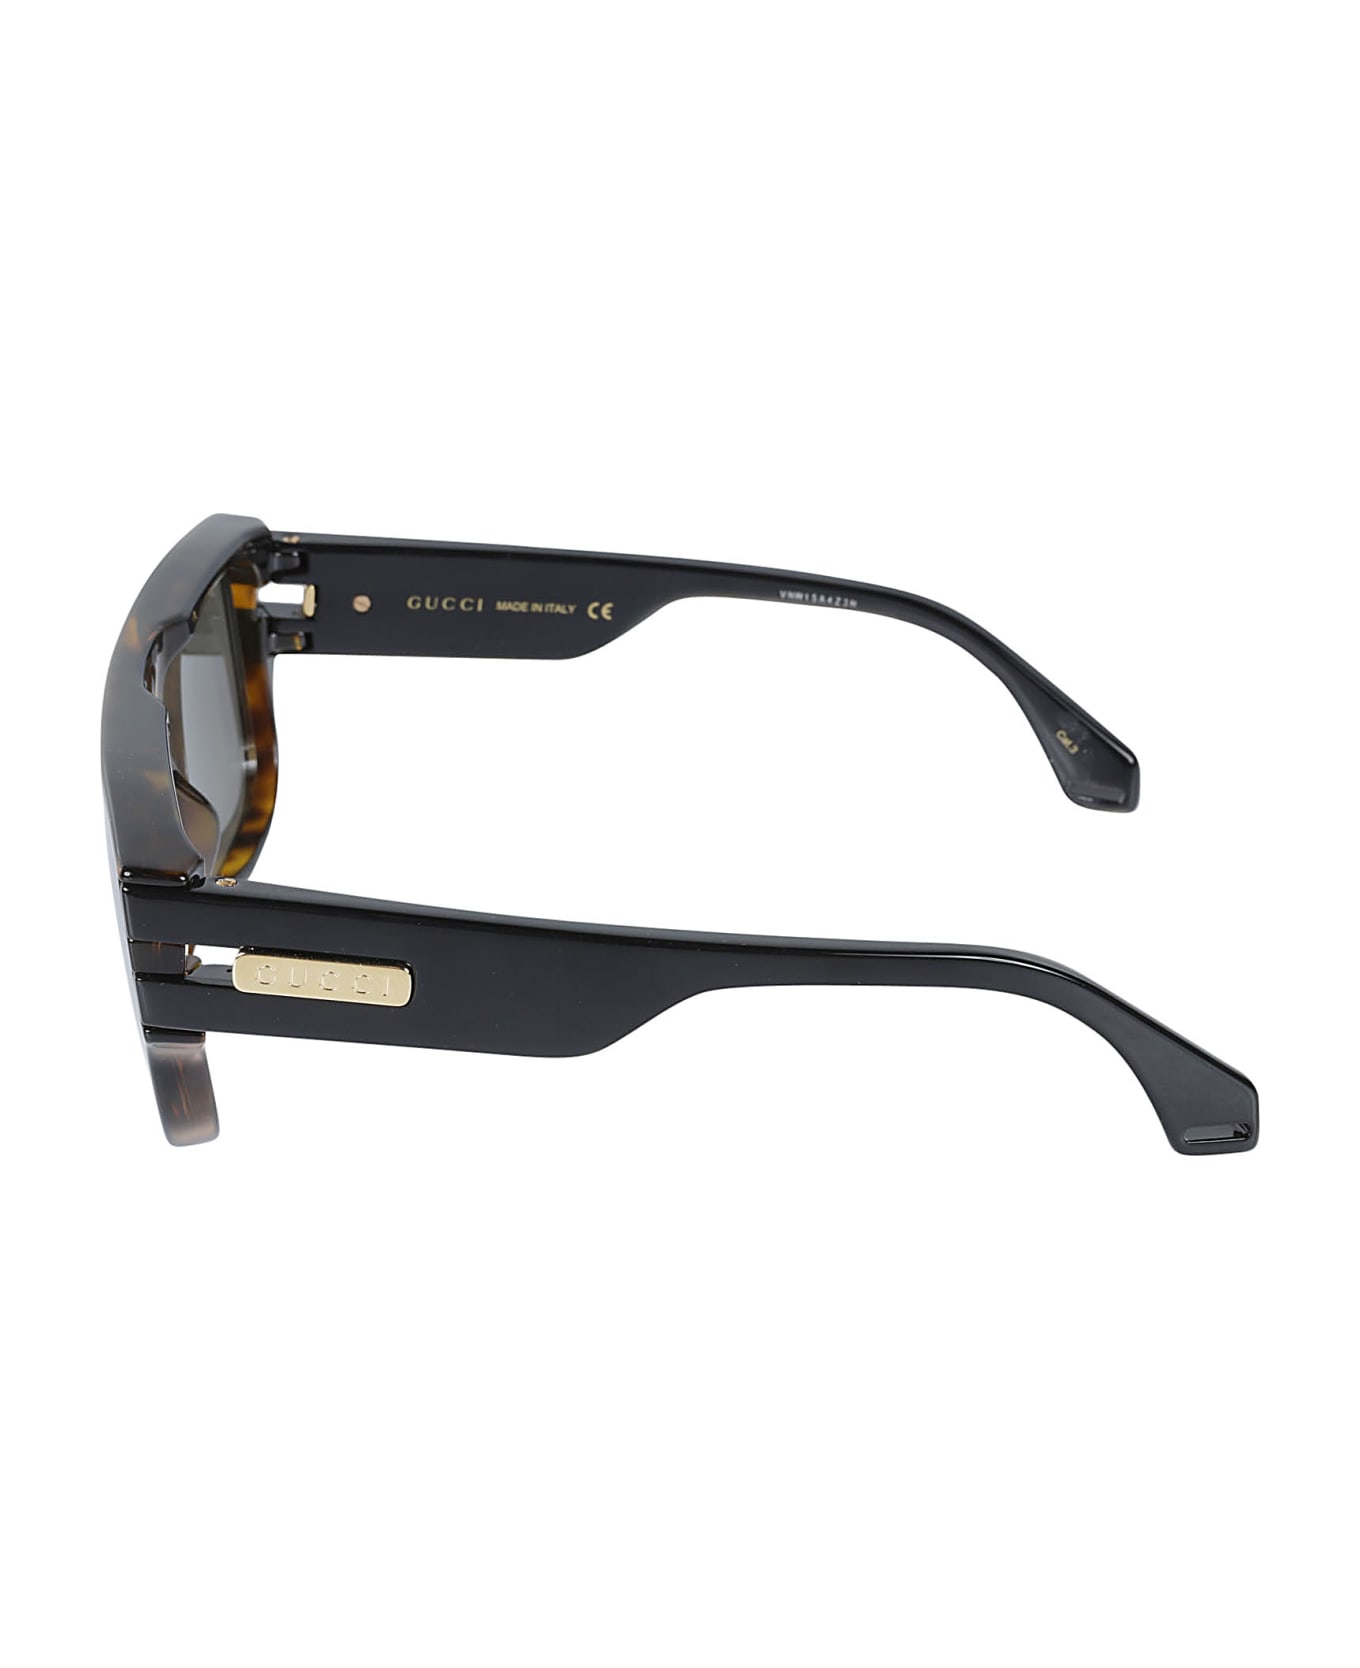 Gucci Eyewear Rectangle Retro Sunglasses - Nero